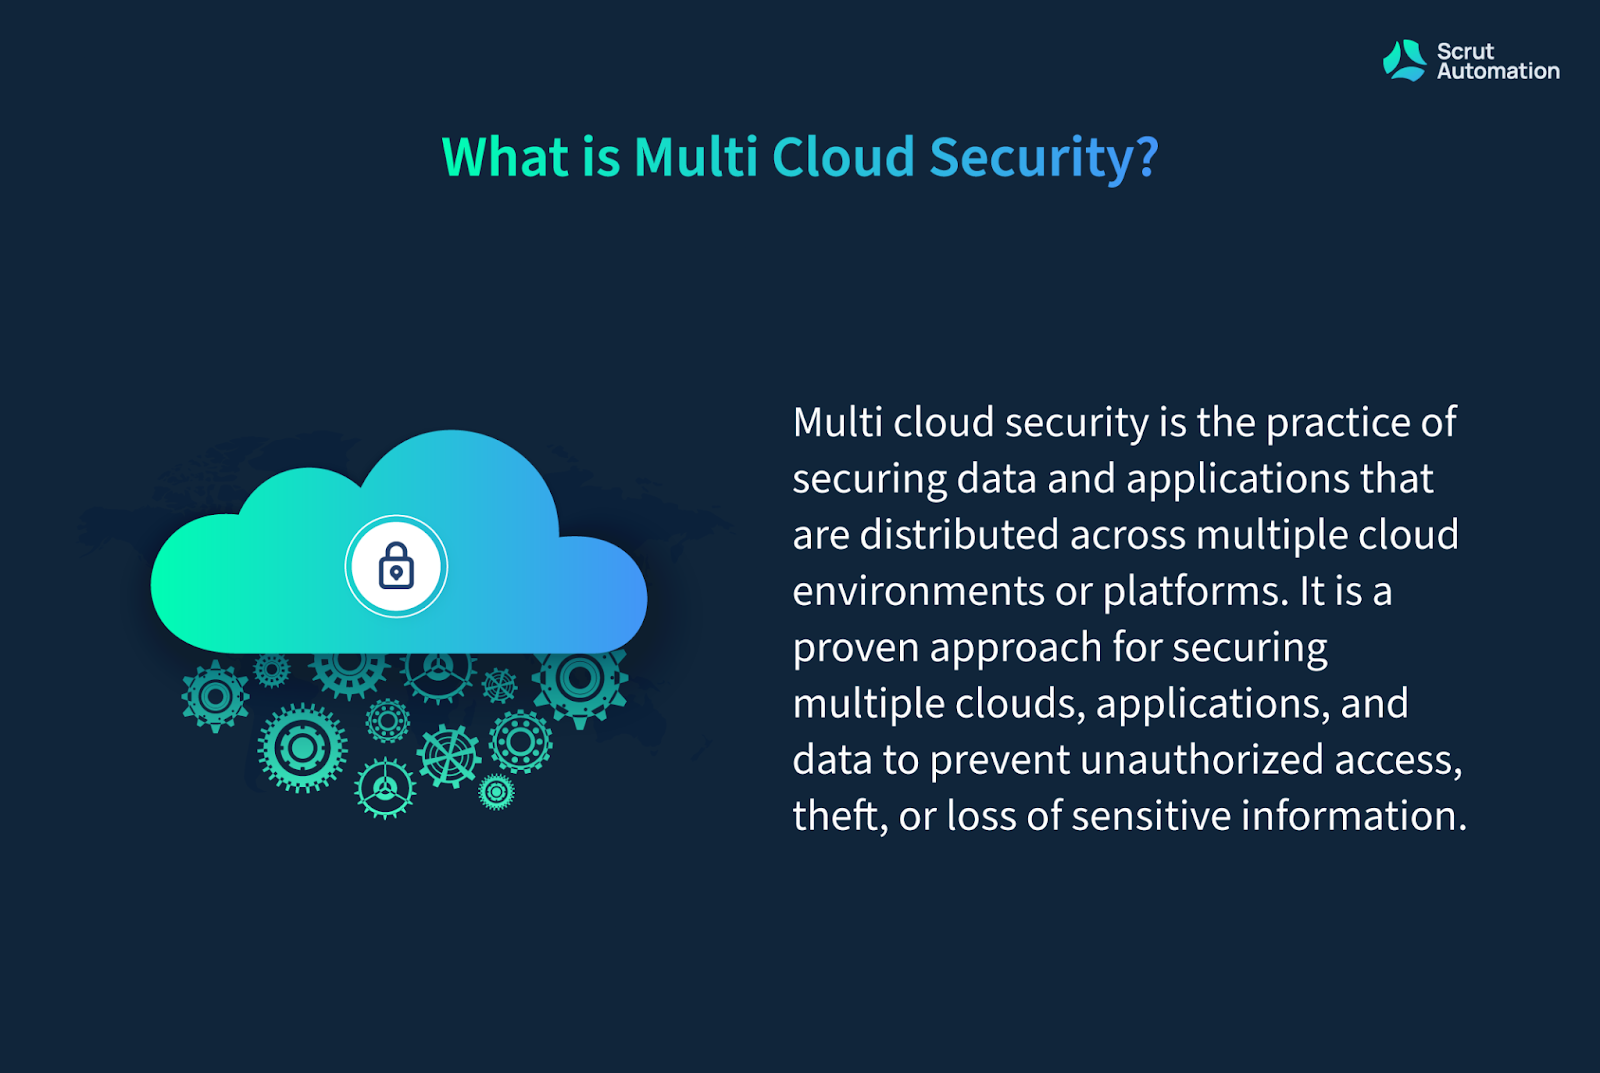 Definition of multi cloud security